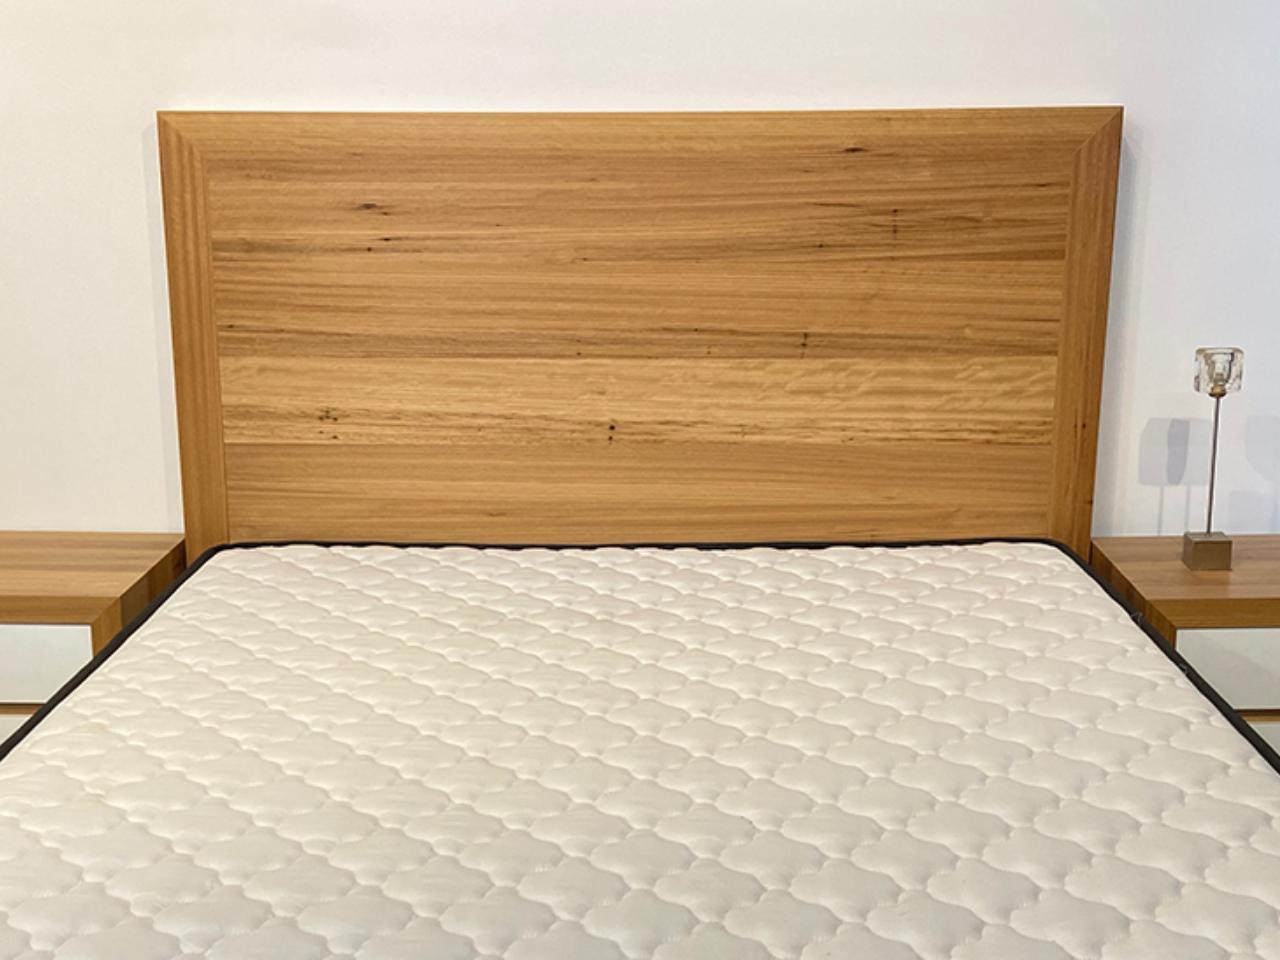 Samai Bedhead Blackbutt Timber Bedroom Quality Furniture Made in Adelaide, South Australia